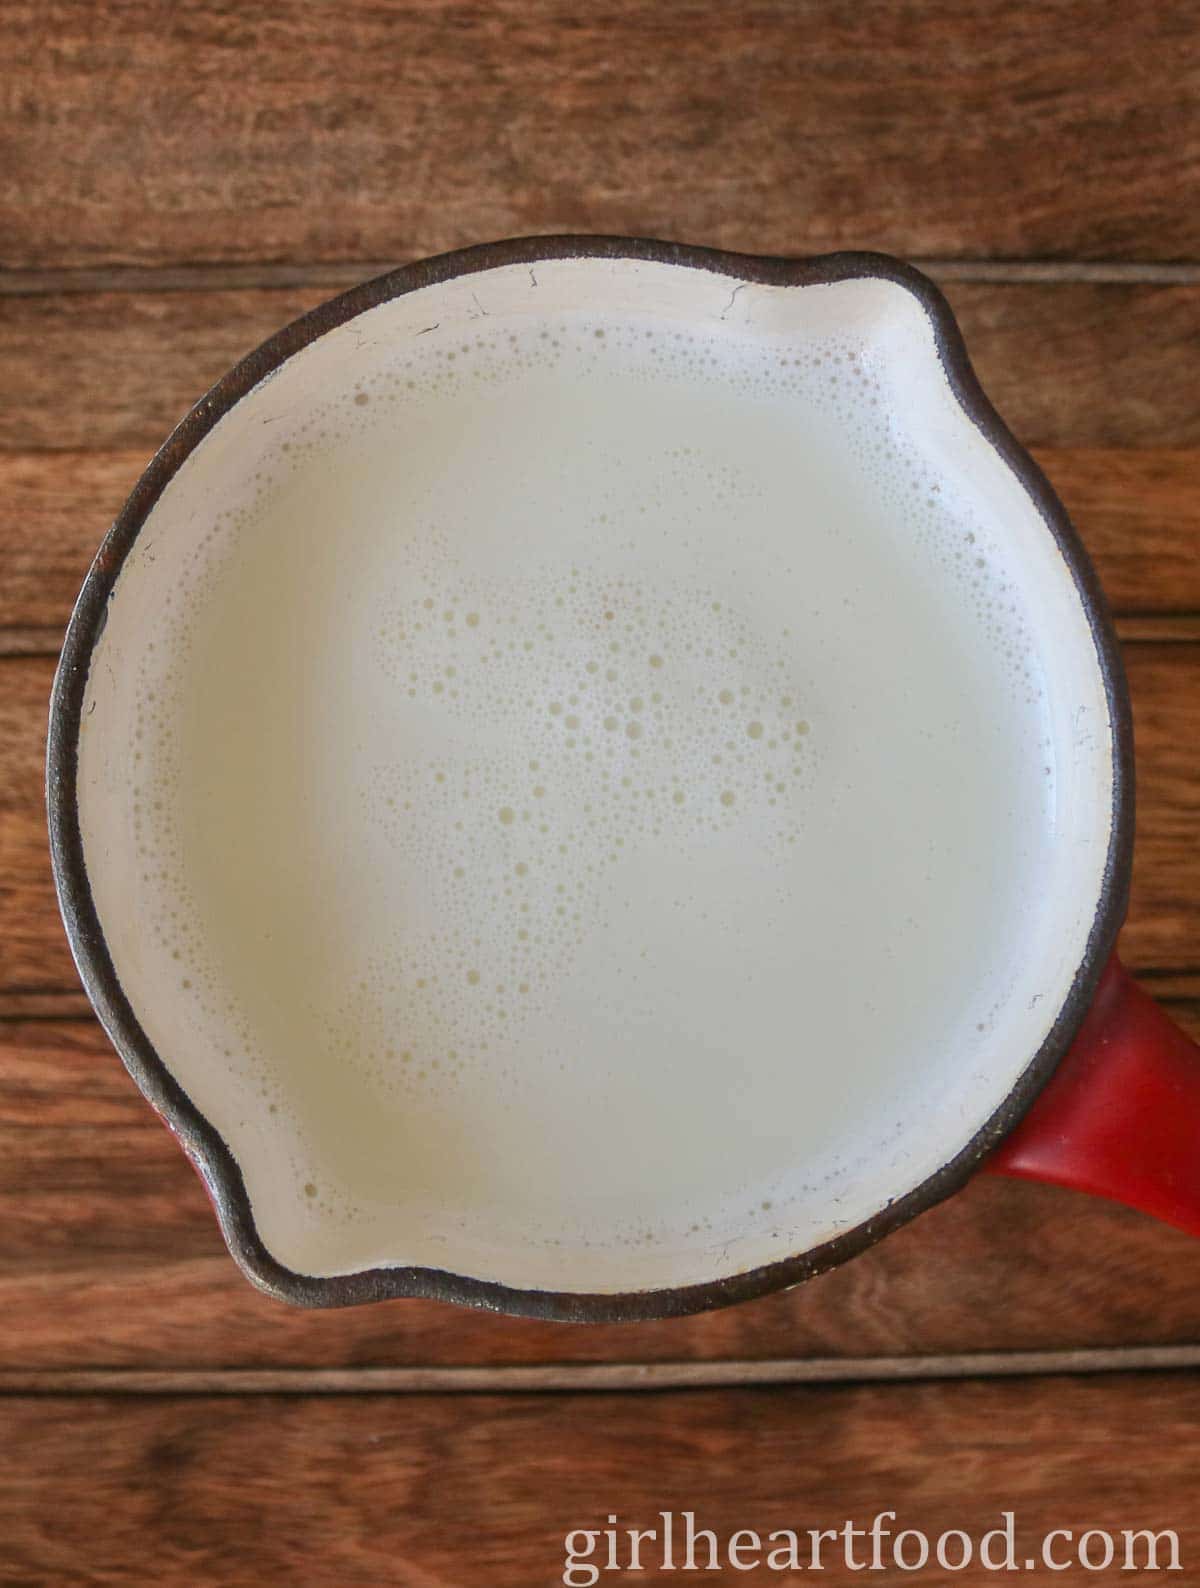 Milk in a saucepan.